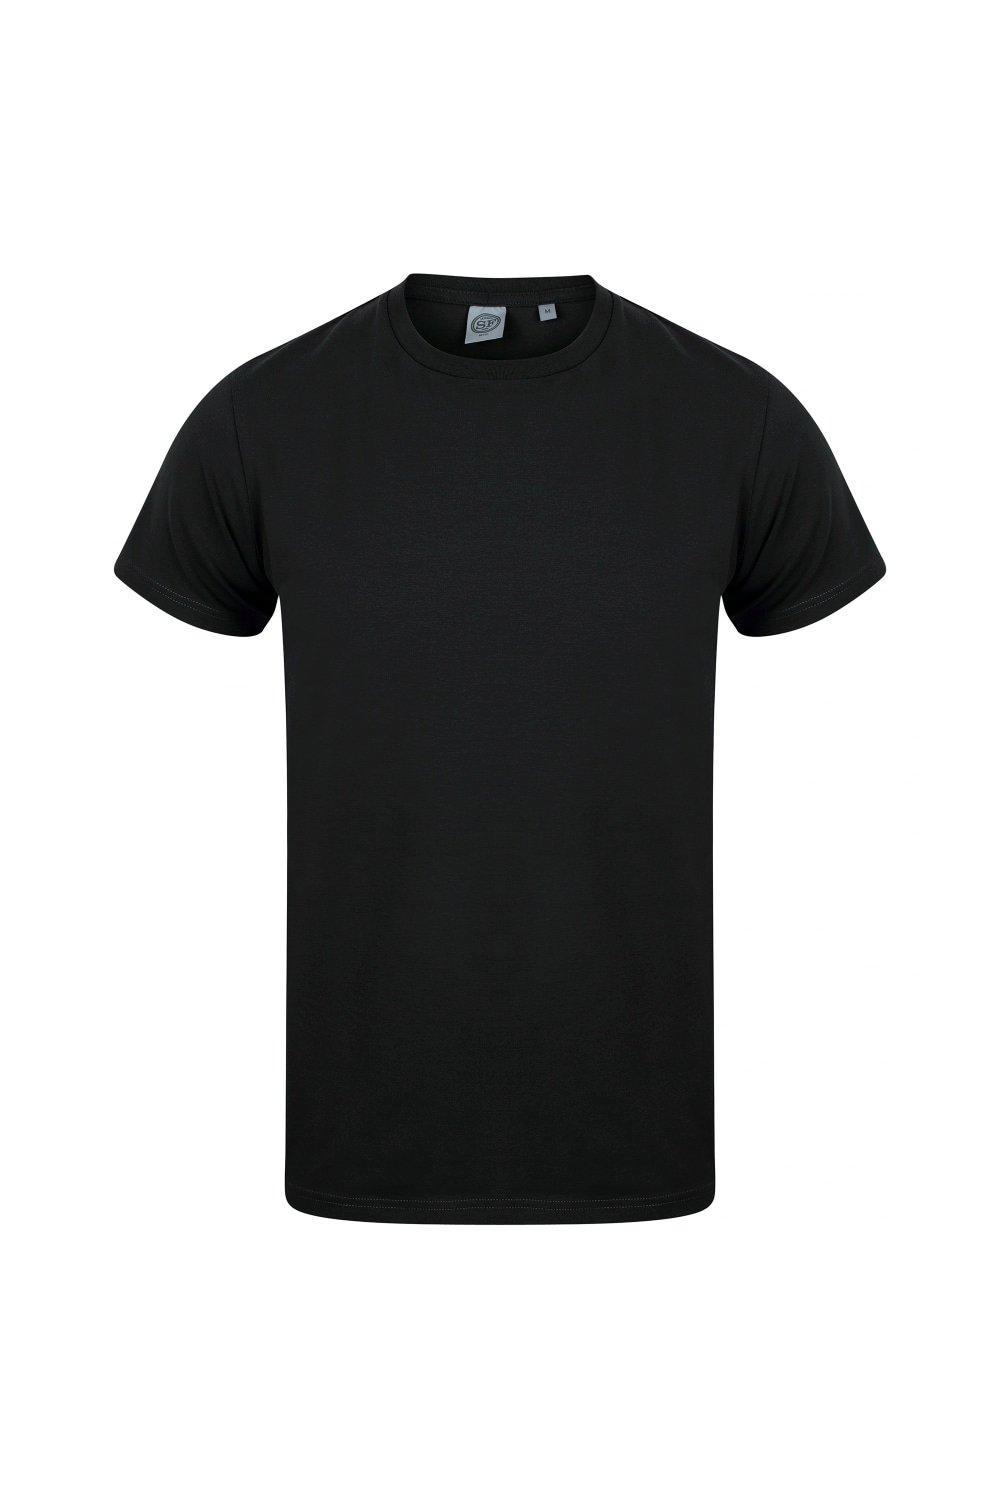 Эластичная футболка SF Minni Feel Good Skinni Fit, черный